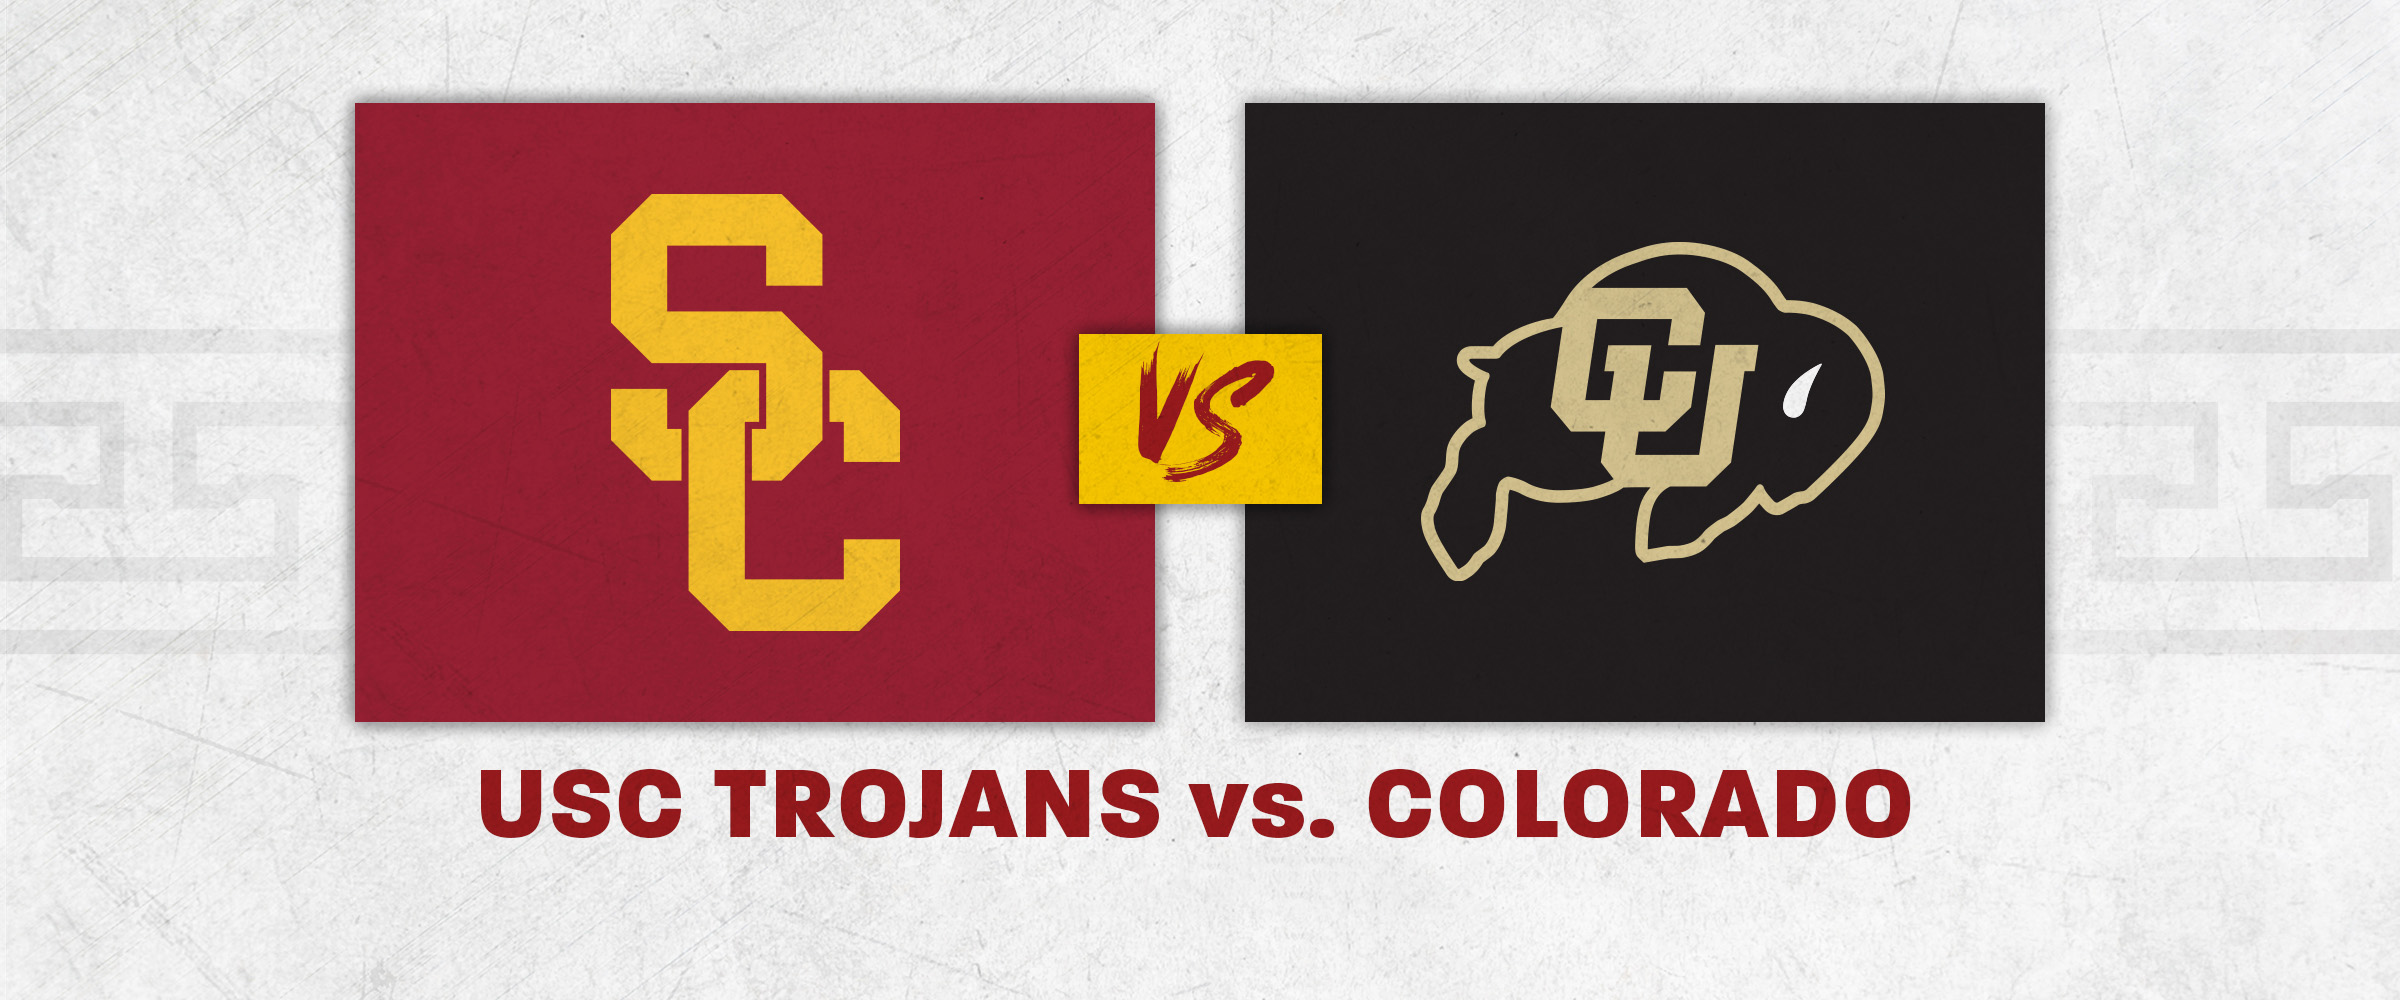 USC vs Colorado